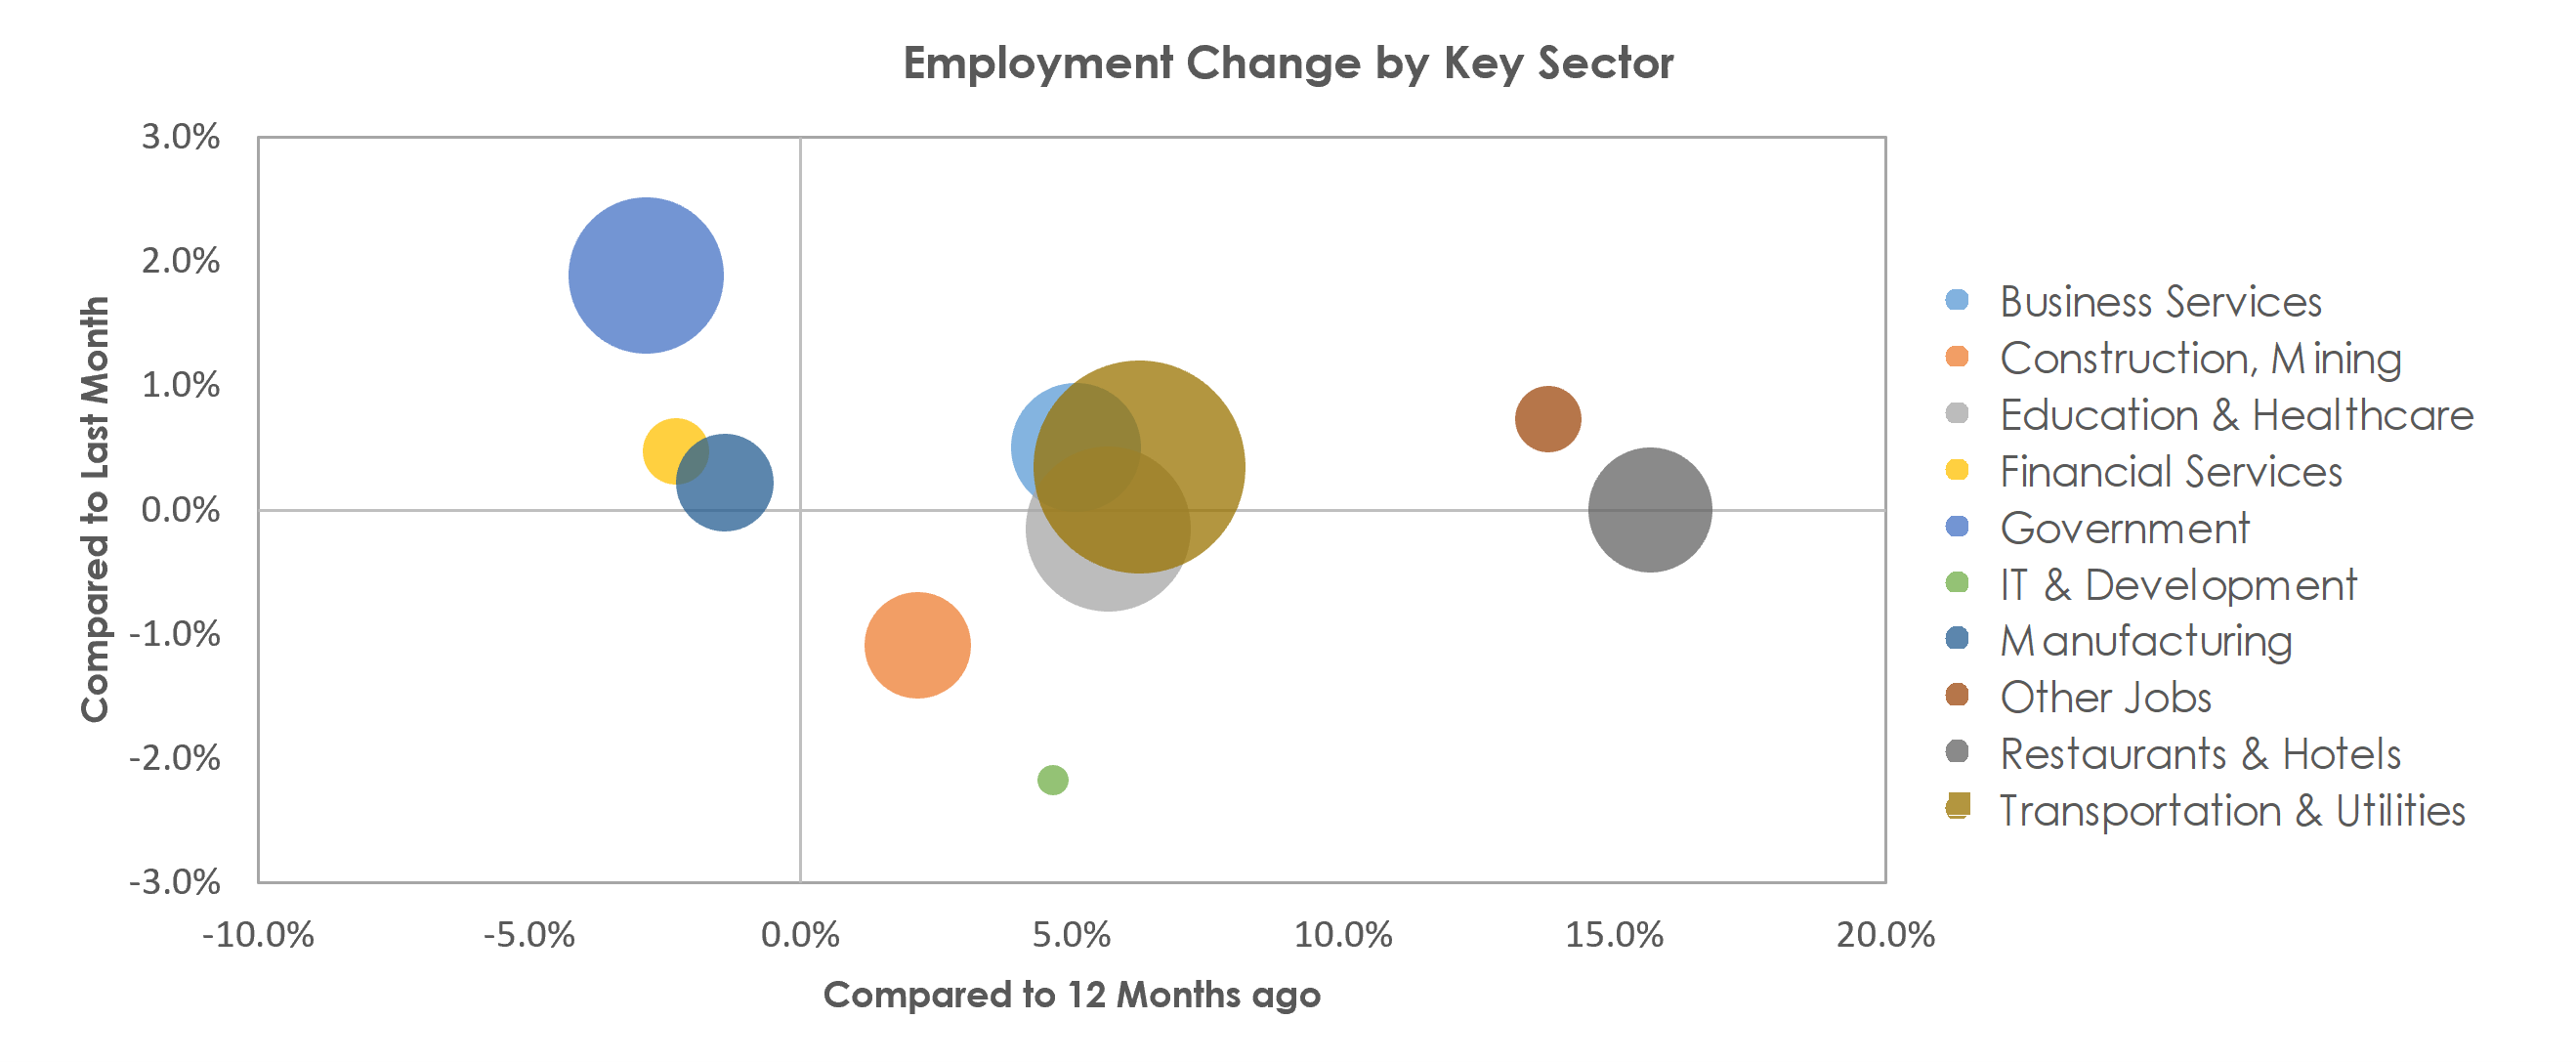 Riverside-San Bernardino-Ontario, CA Unemployment by Industry August 2021